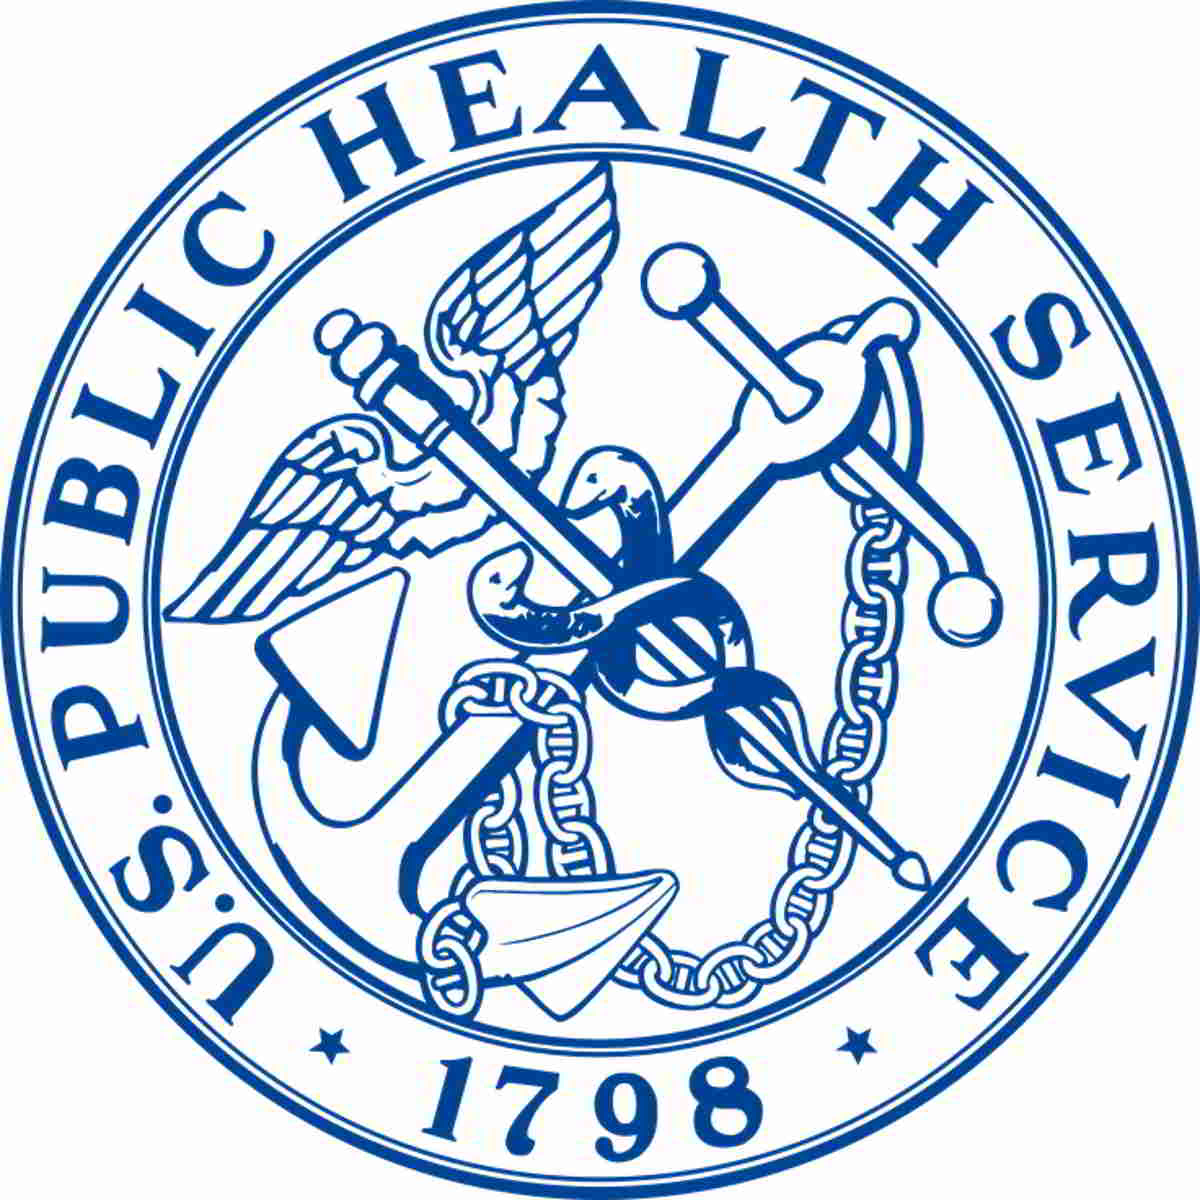 Public health courses in Kenya